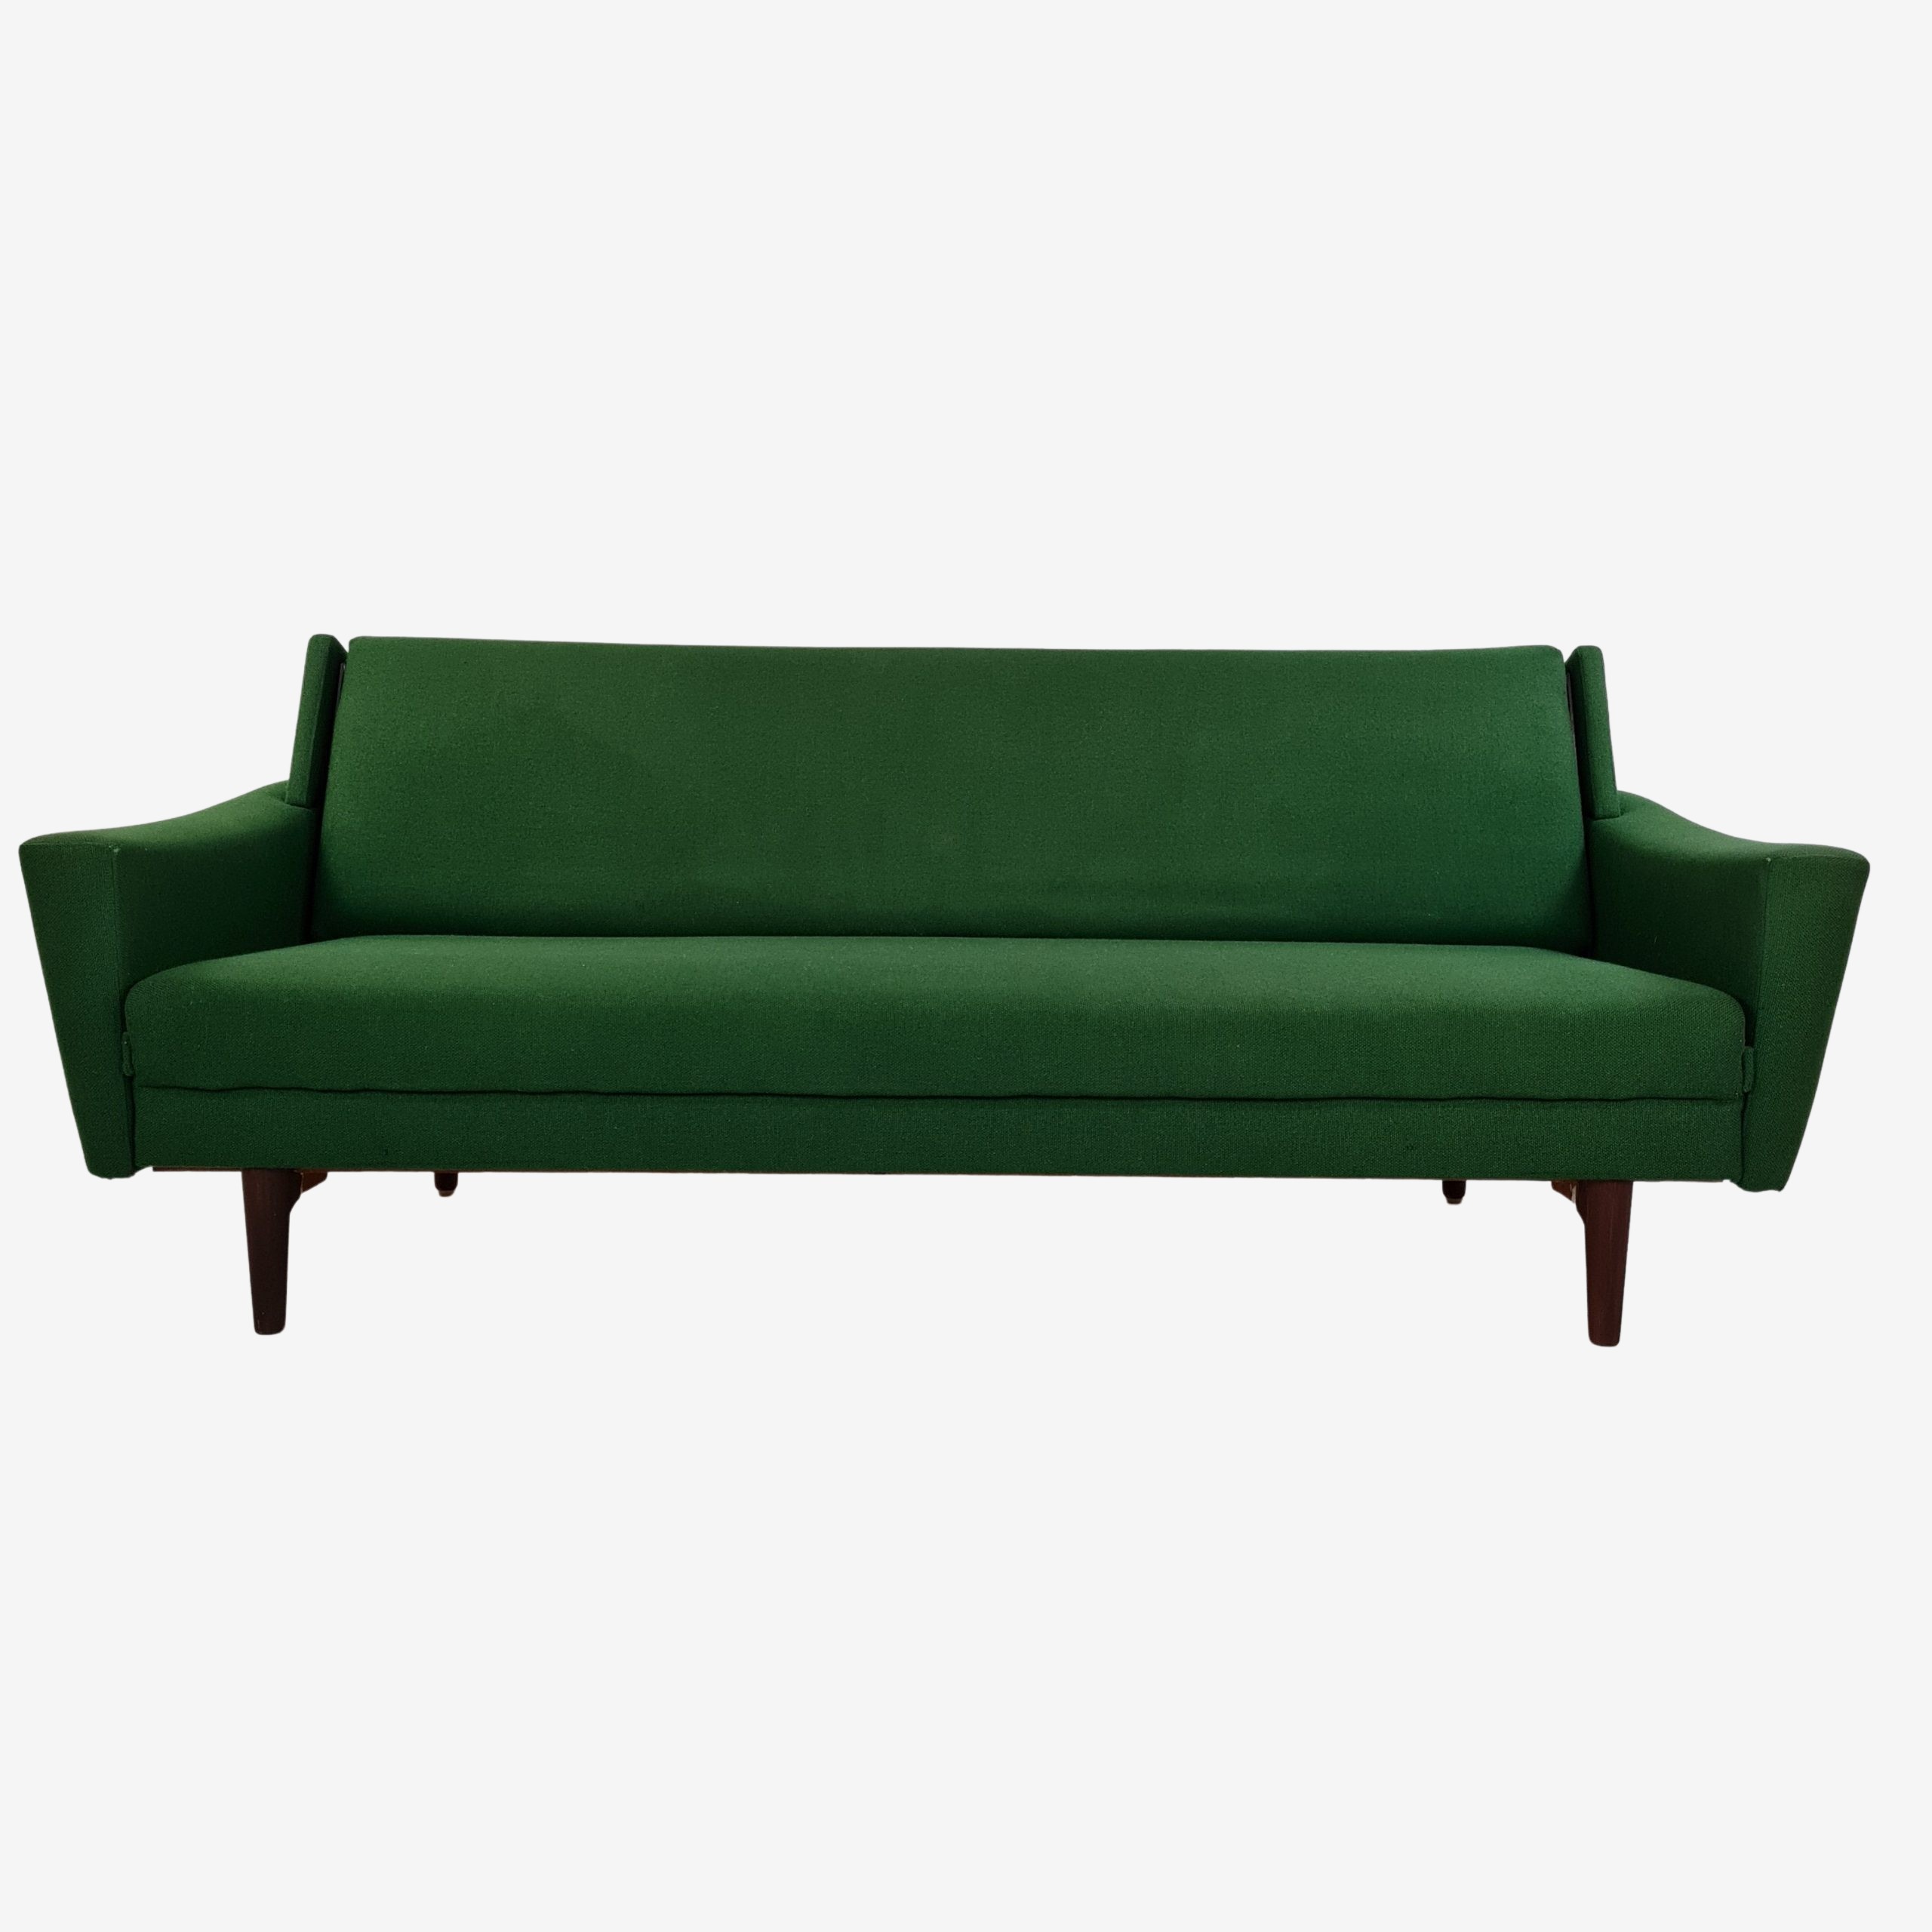 Sofa | Sofa bed | Green wool fabric | Teak legs